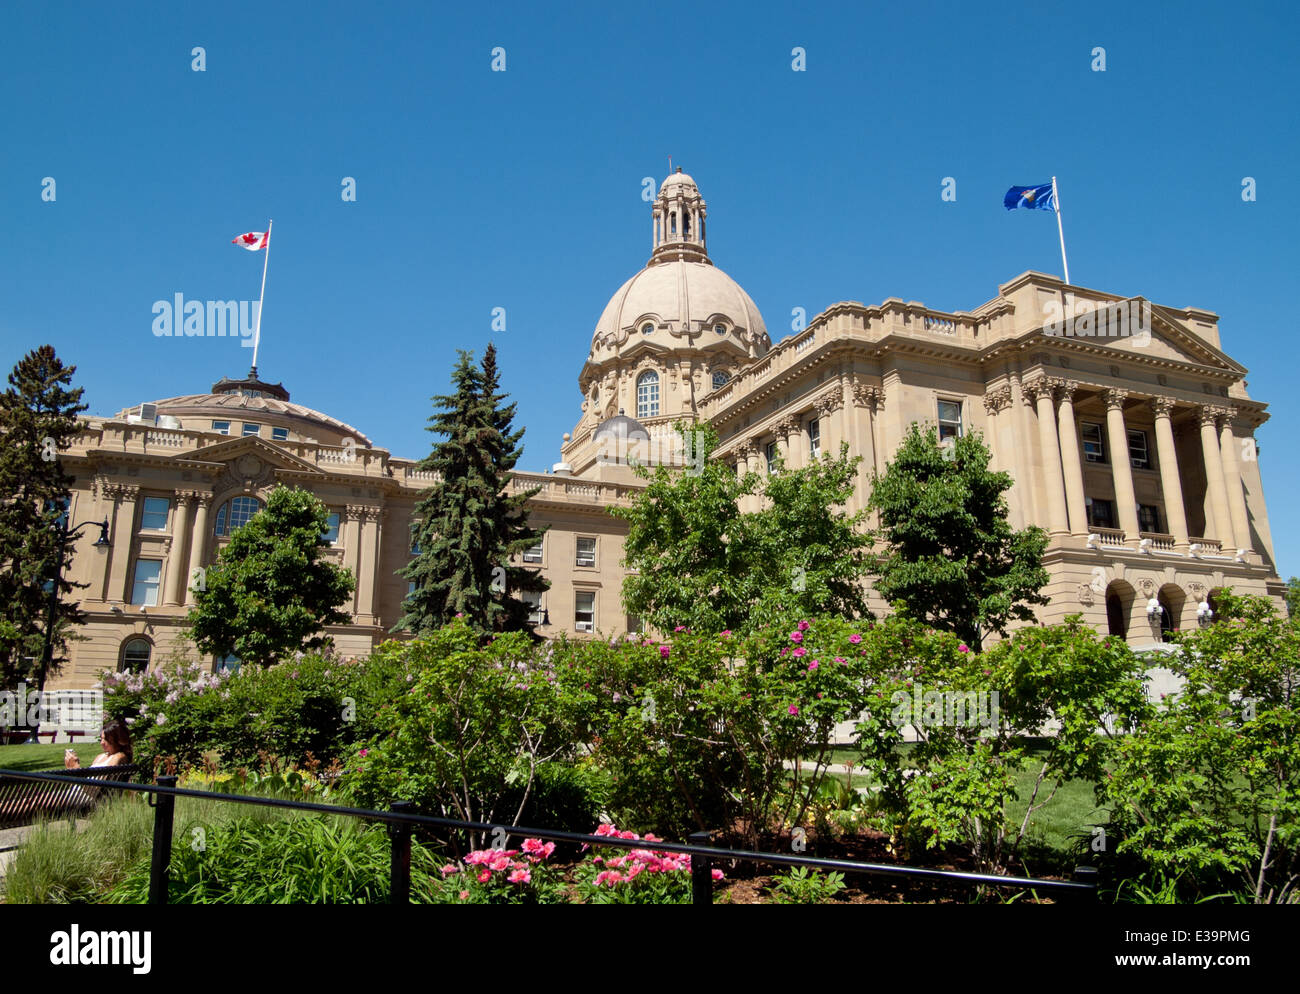 A view of the Alberta Legislature Building as seen from the Lois Hole Memorial Garden.  Edmonton, Alberta, Canada. Stock Photo